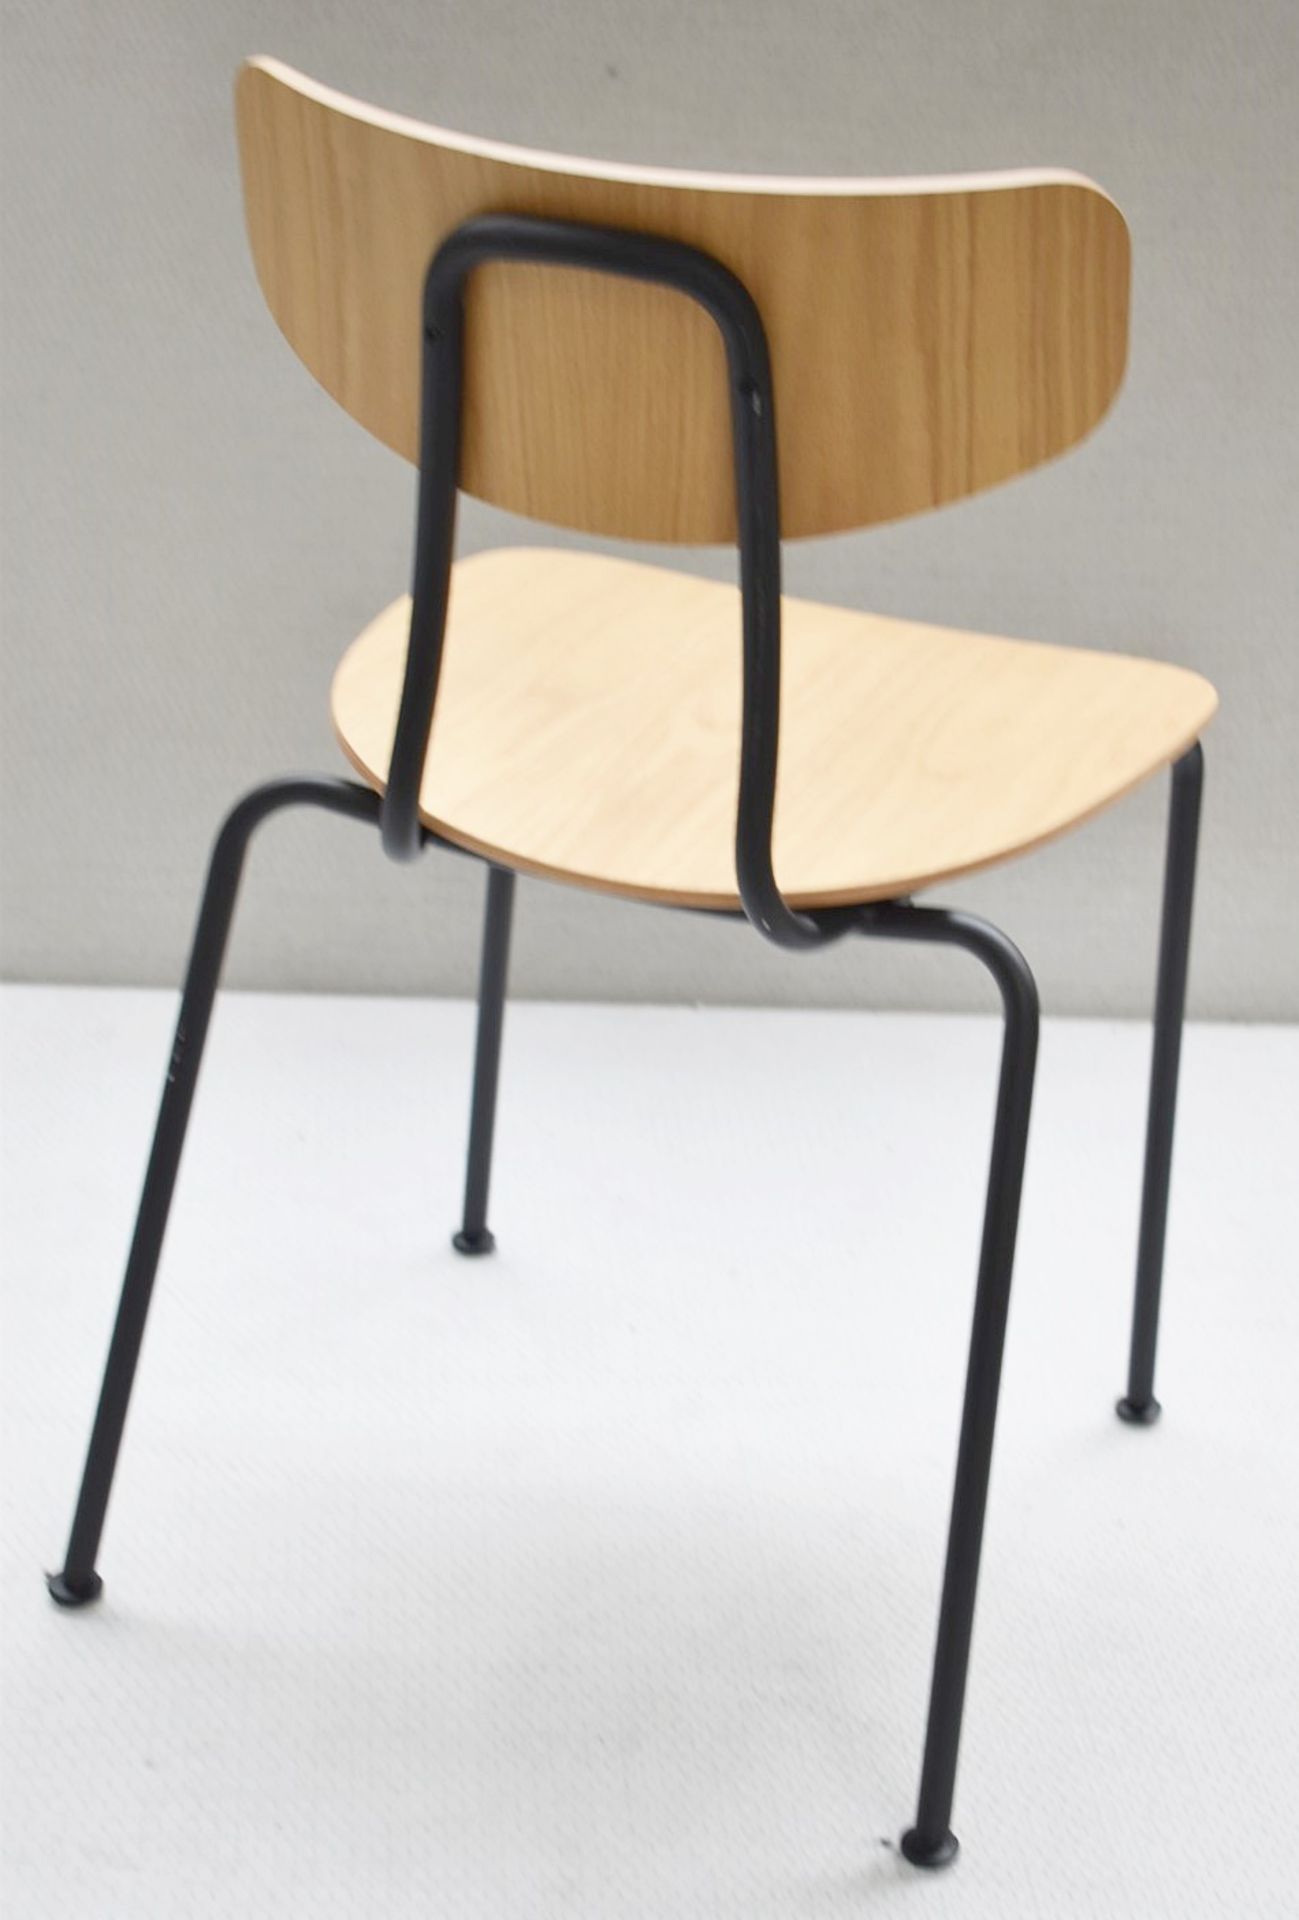 1 x VITRA 'Moca' Designer Chair with an Oak Seat & Backrest - Original RRP £389.00 - Image 3 of 4